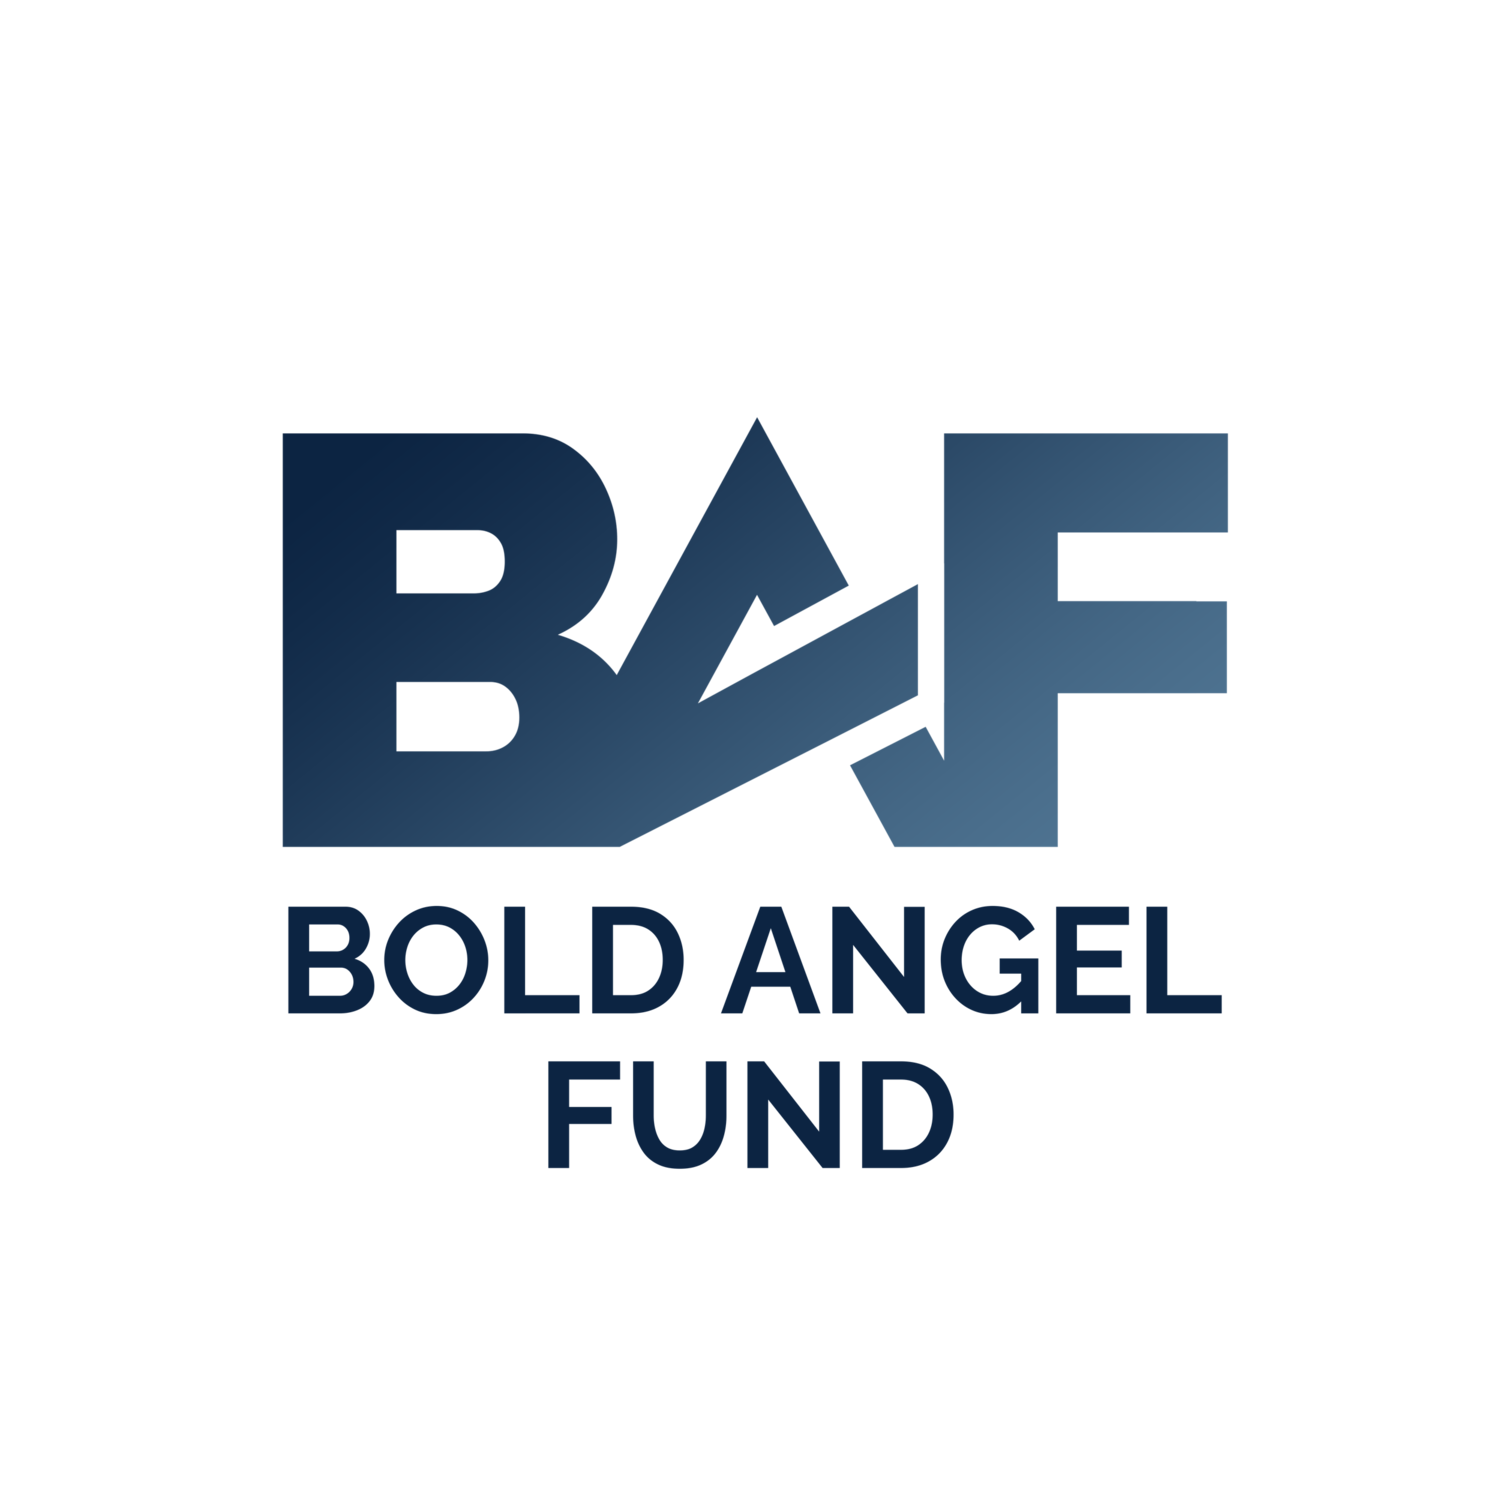 Bold Angel Fund